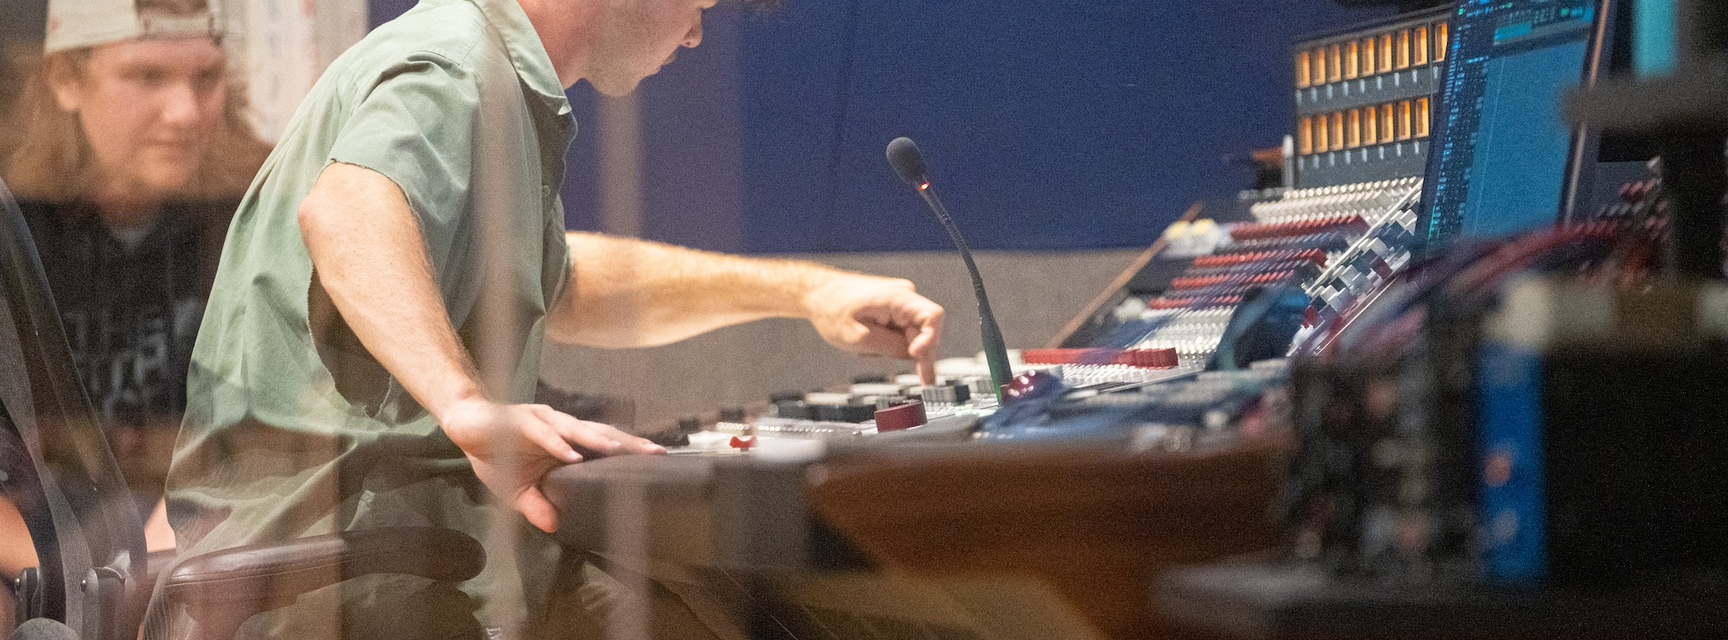 Student operating soundboard